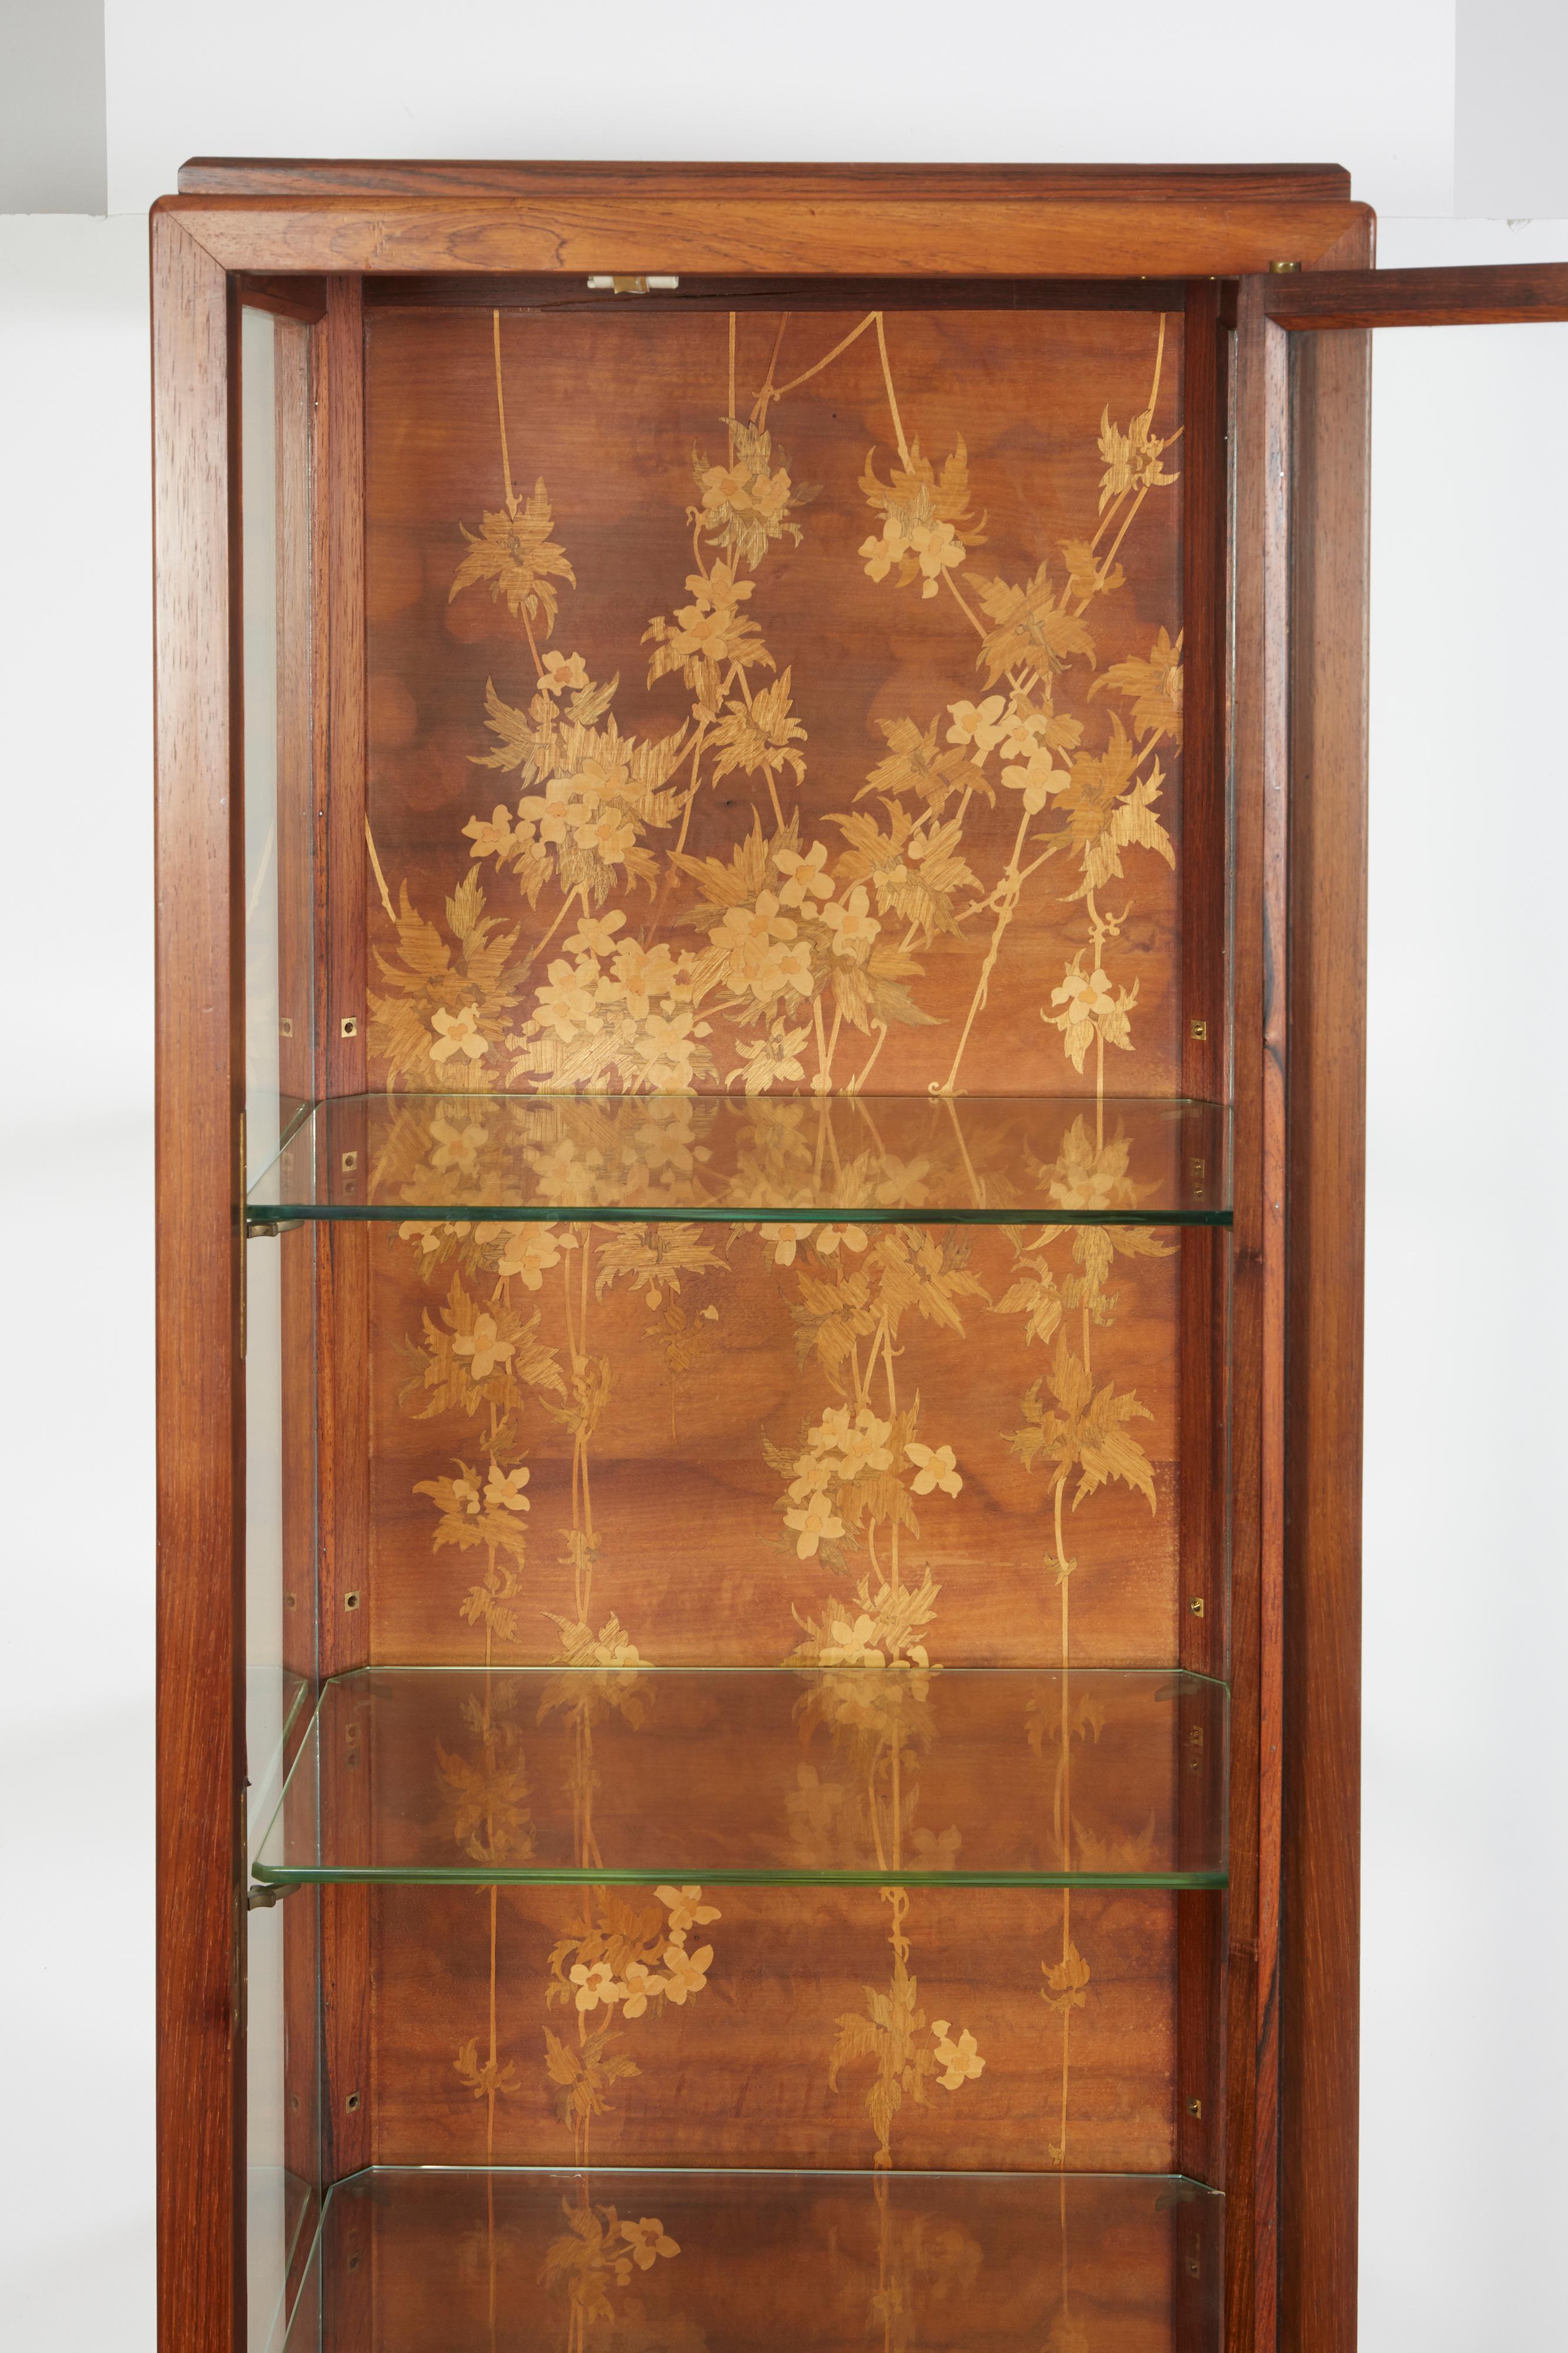 Wood Galle Display Cabinet or Vitrine